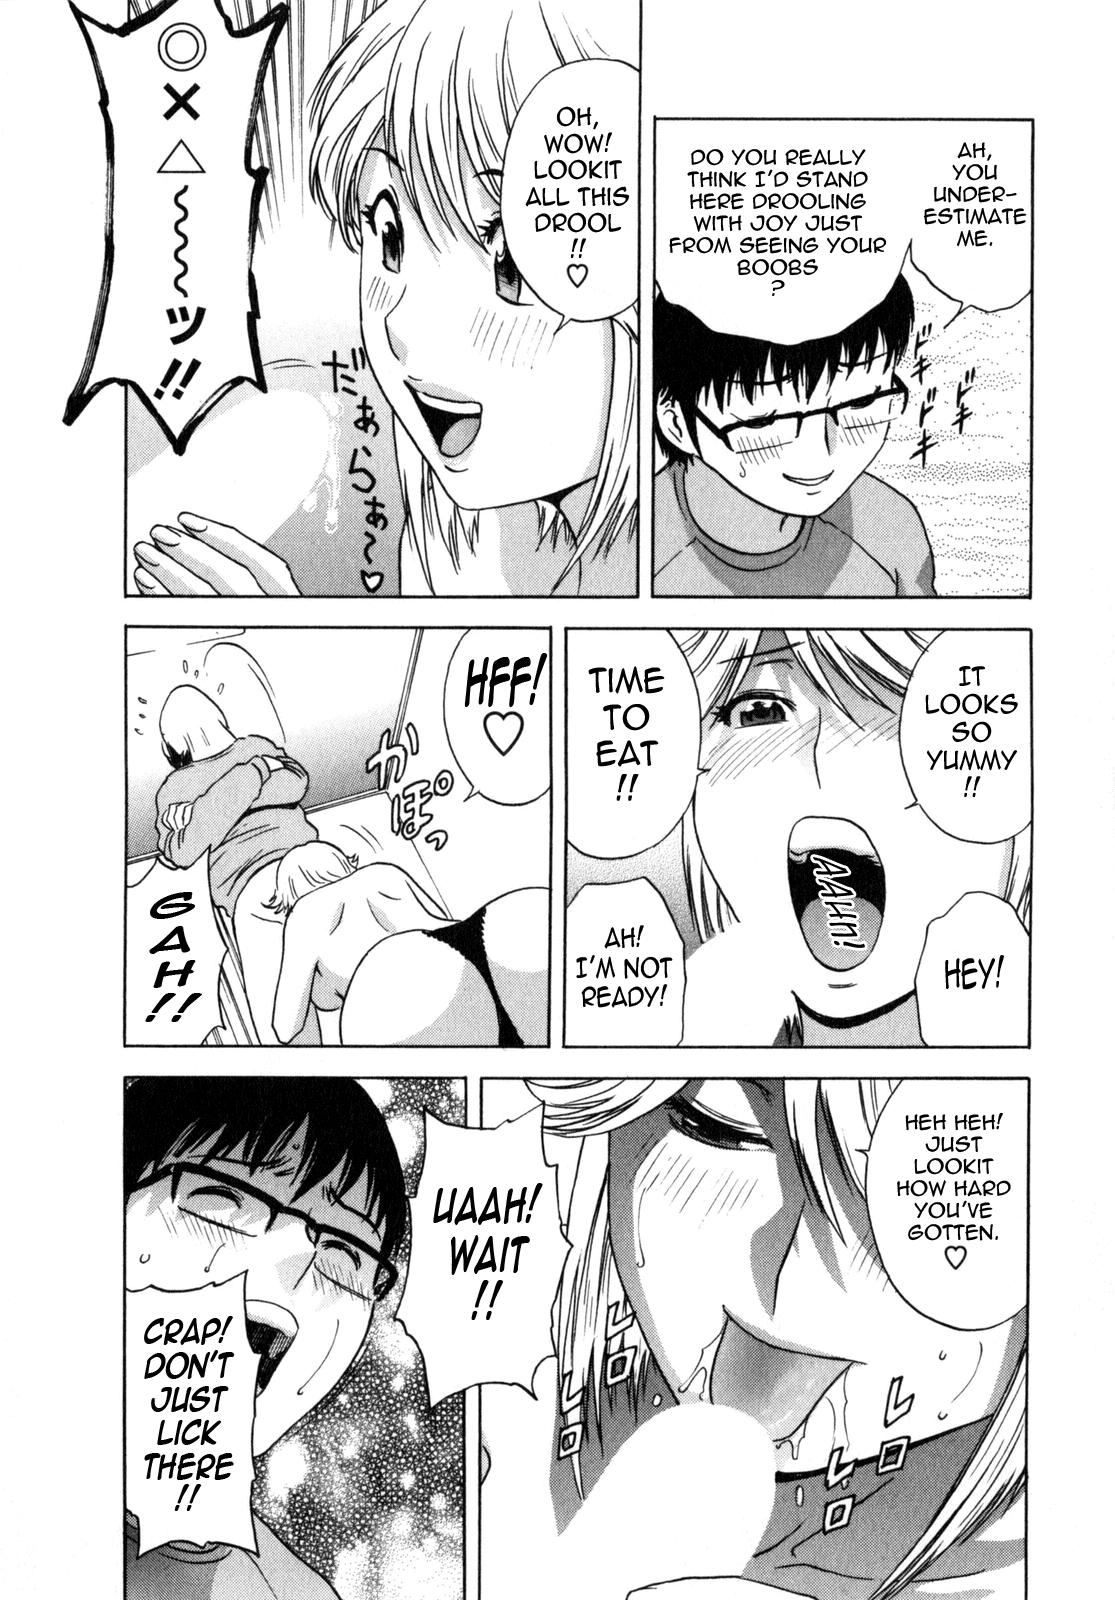 [Hidemaru] Life with Married Women Just Like a Manga 1 - Ch. 1-9 [English] {Tadanohito} 33